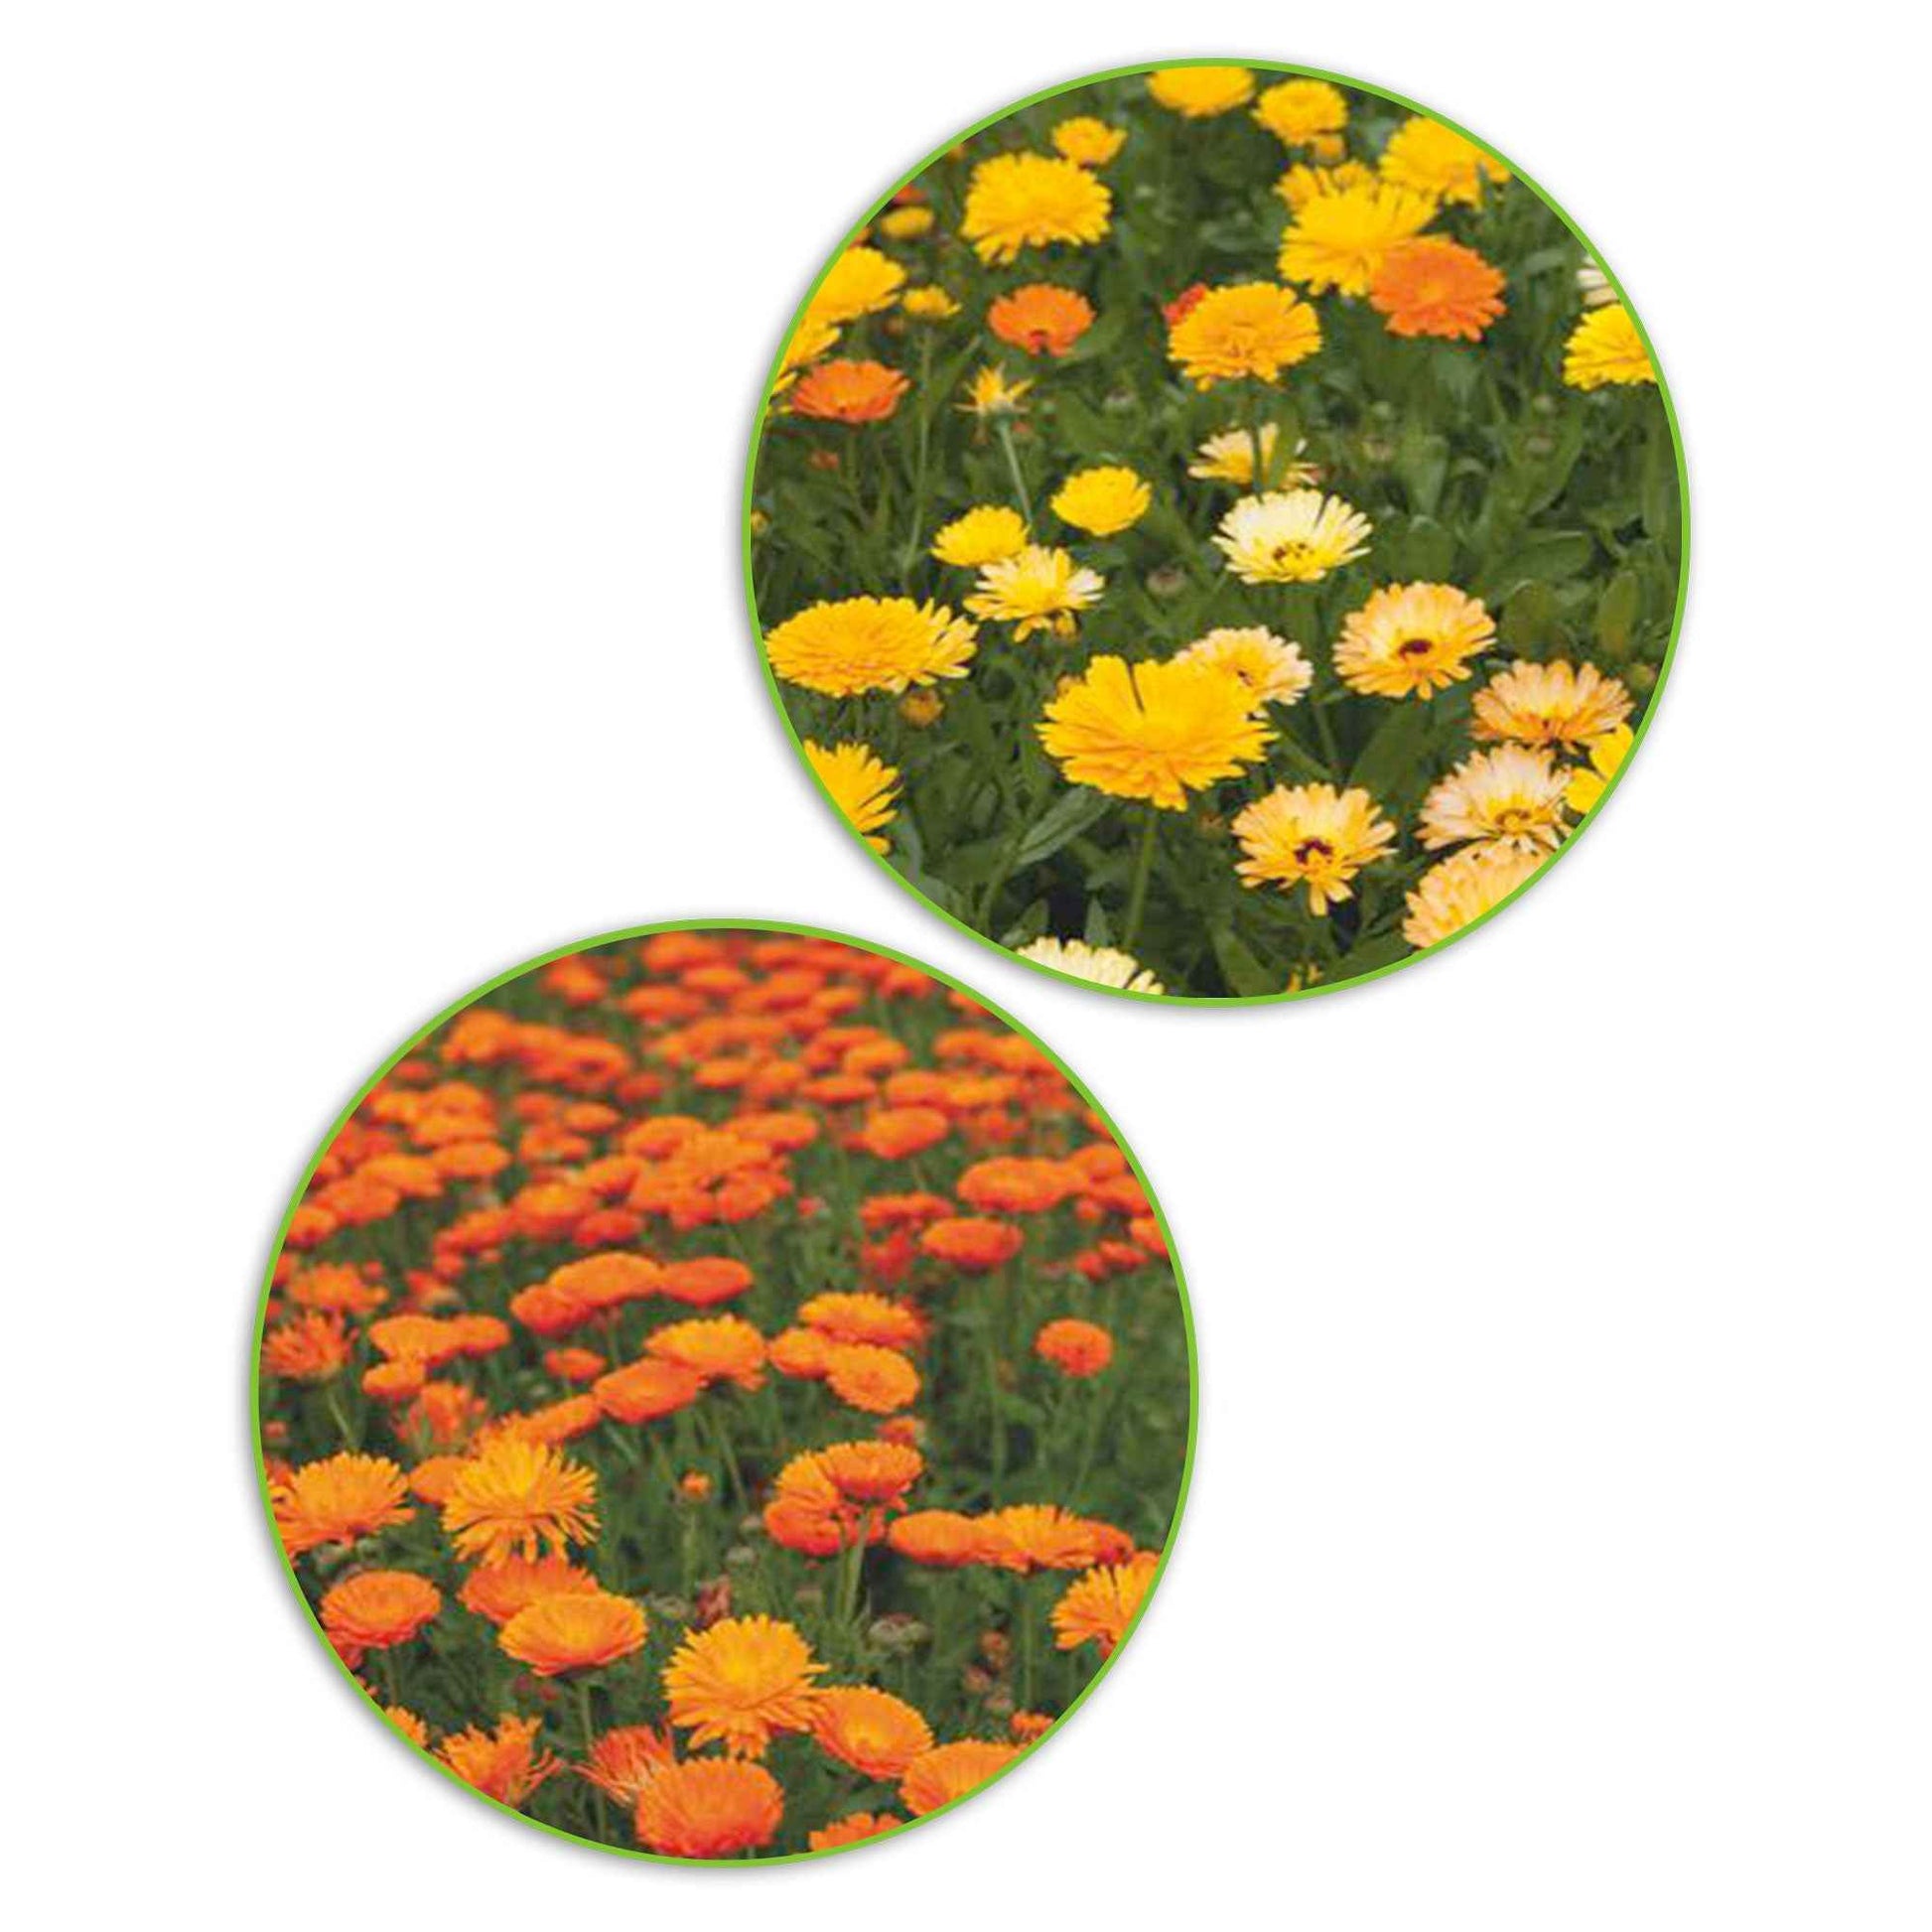 Marigoldpaket Calendula 'Glitzerndes Gold' gelb-orange 5,5 m² - Blumensamen - Gartenpflanzen